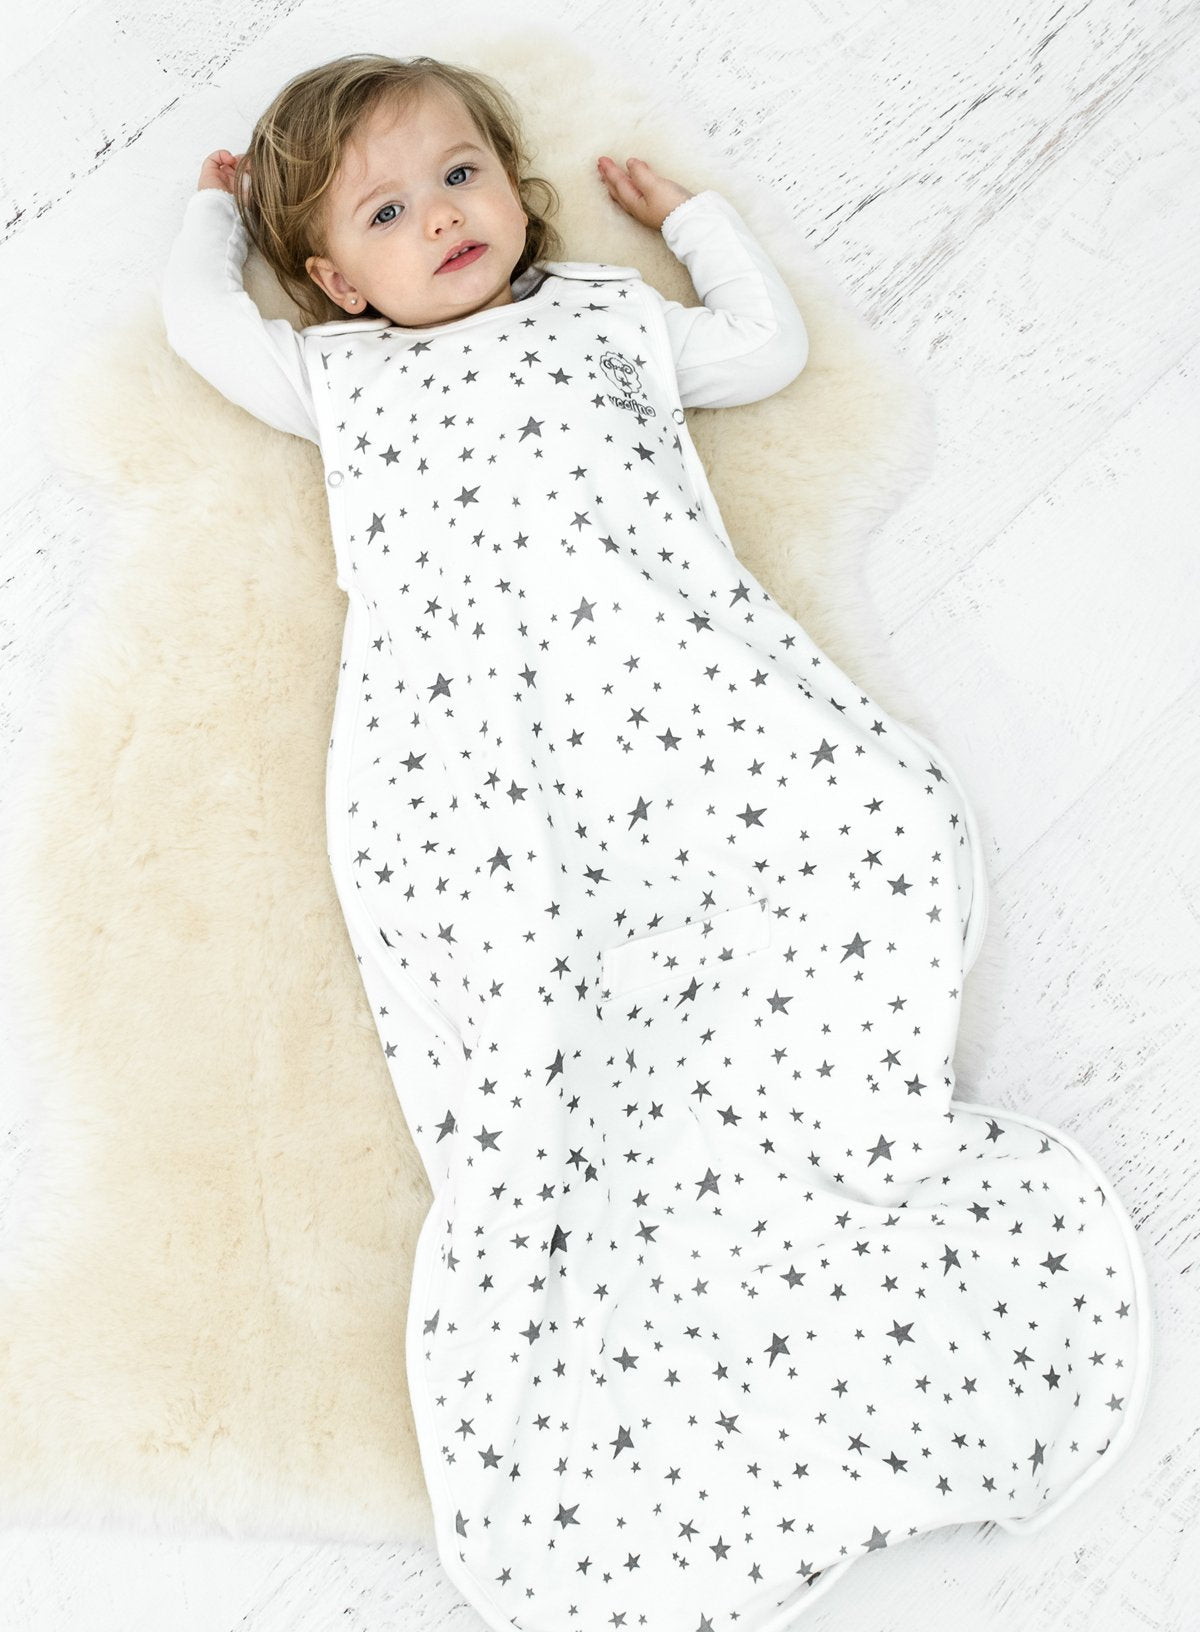 4 Season Ultimate Toddler Sleep Bag, Merino Wool, 2 - 4 Years, Star White